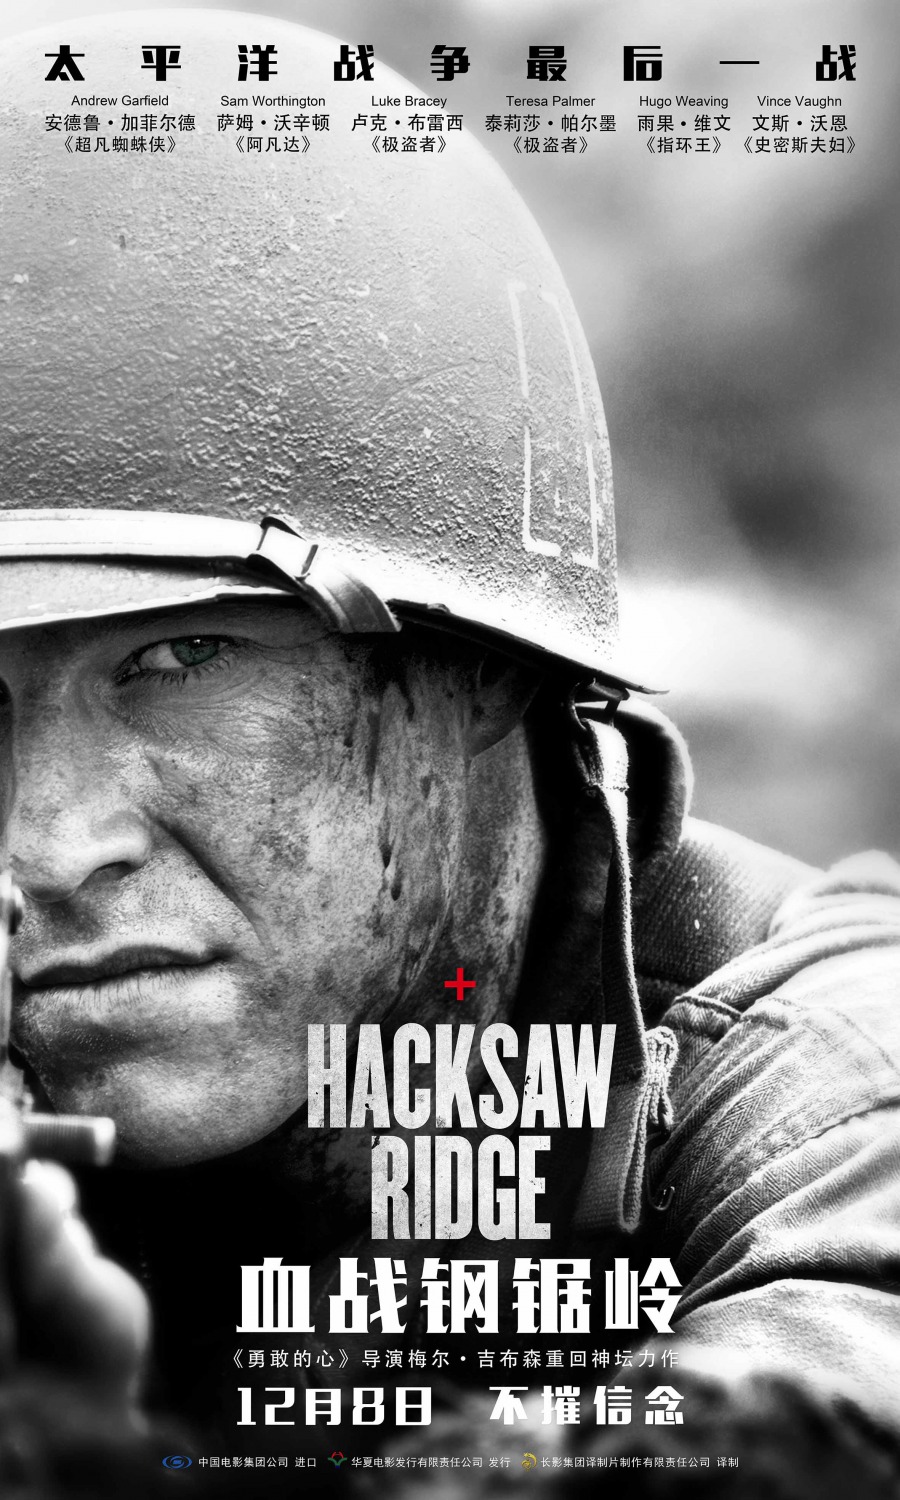 Extra Large Movie Poster Image for Hacksaw Ridge (#13 of 19)